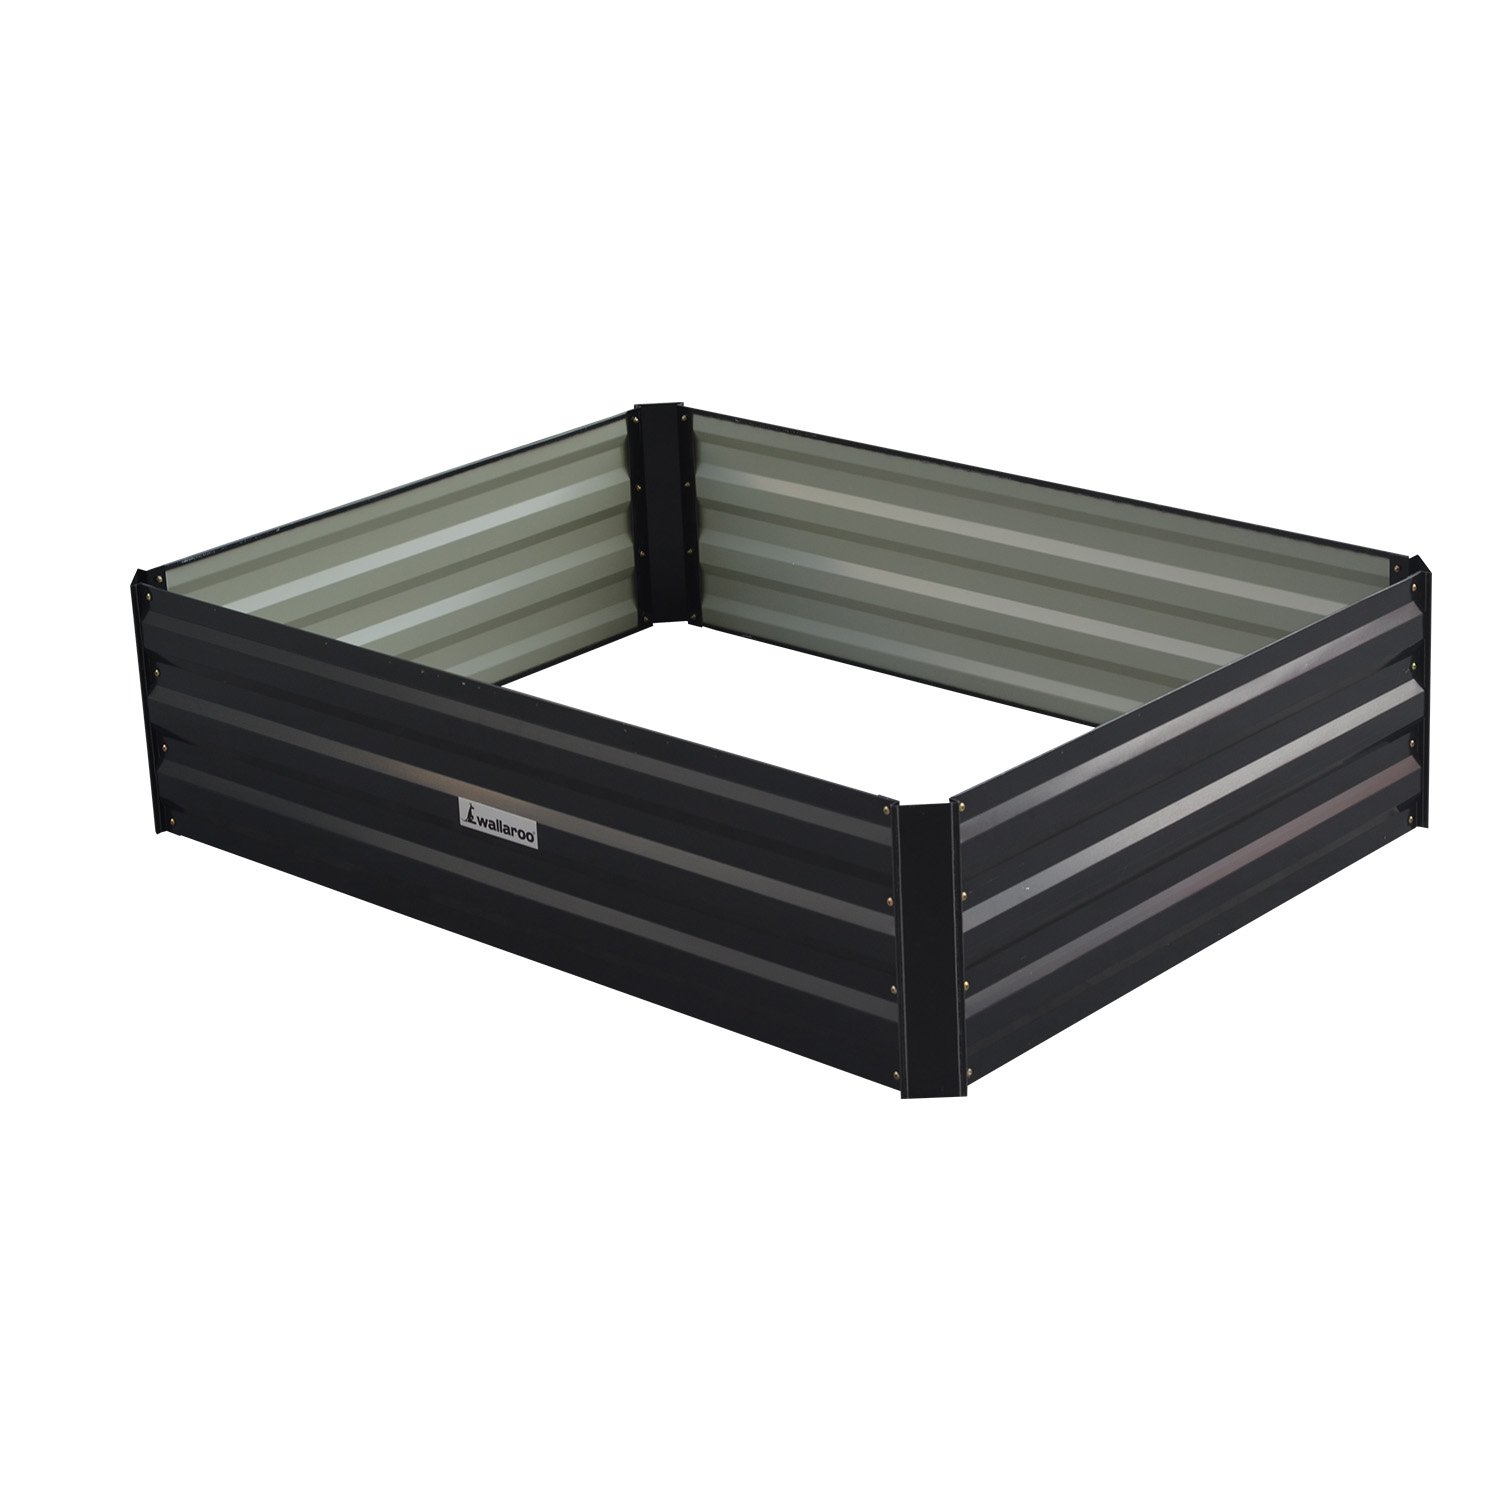 Wallaroo Garden Bed 120 x 90 x 30cm Galvanized Steel - Black 2